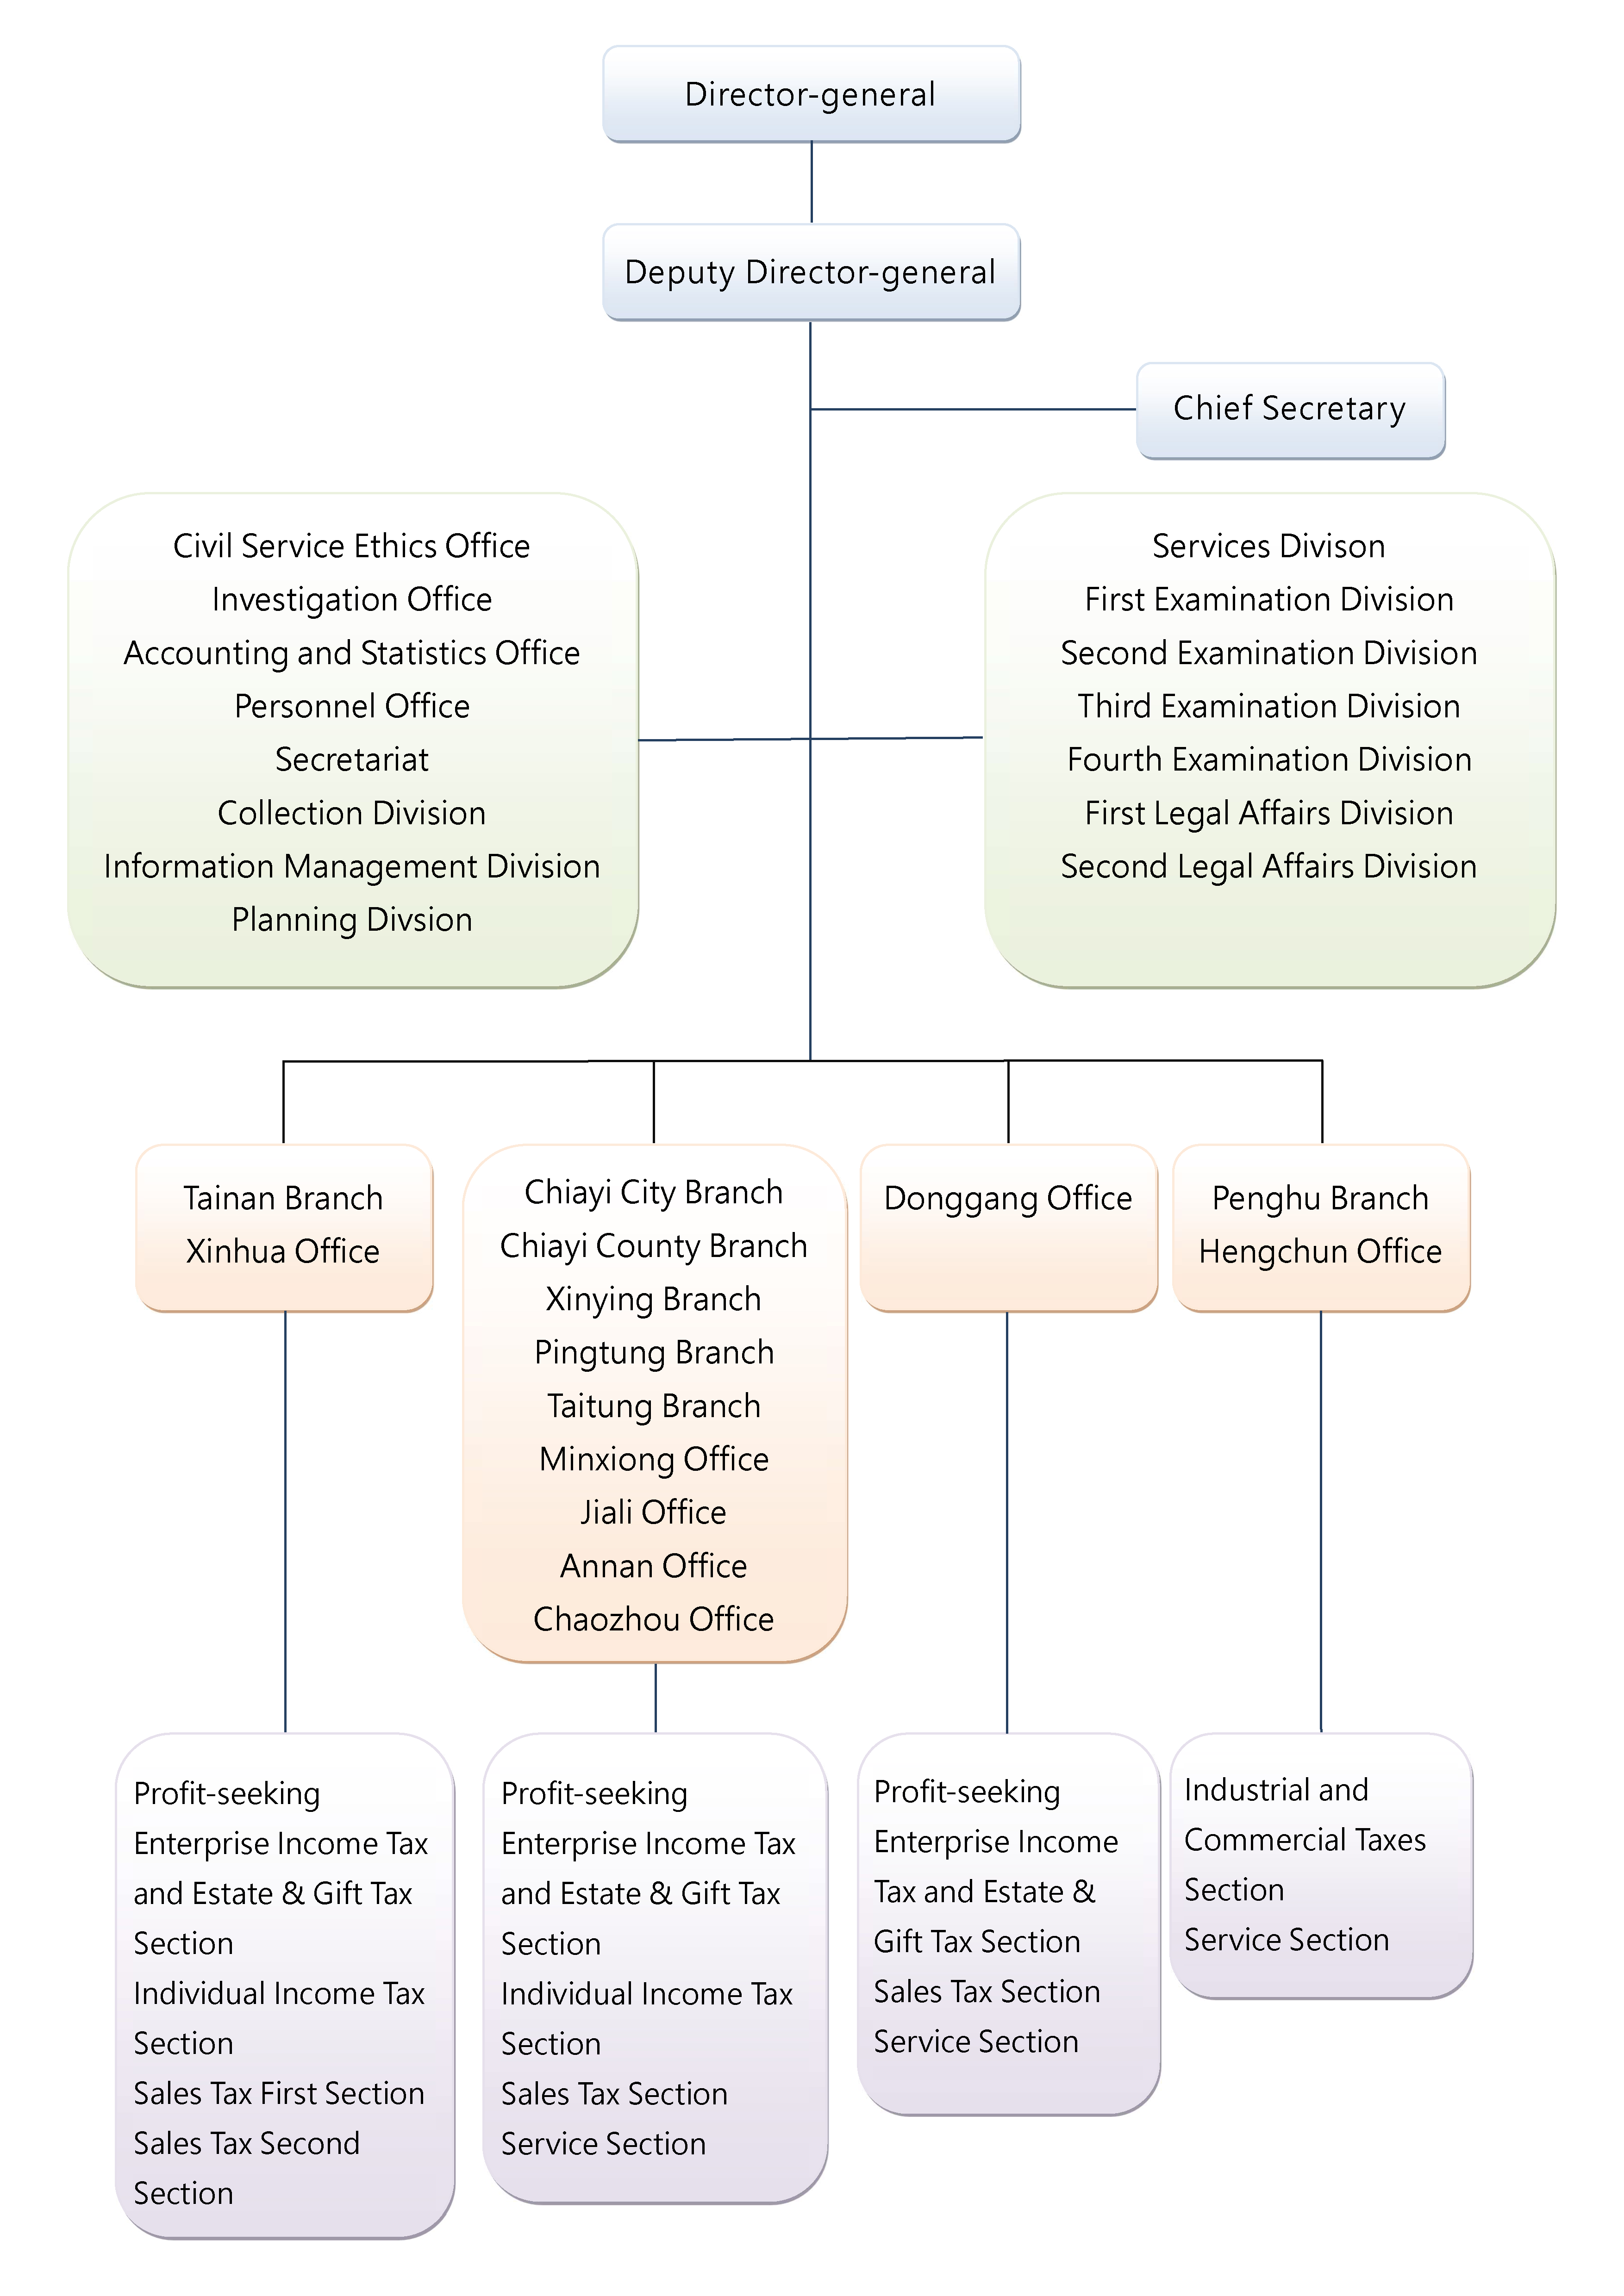 National Taxation Bureau of the Southern Area Organization Chart